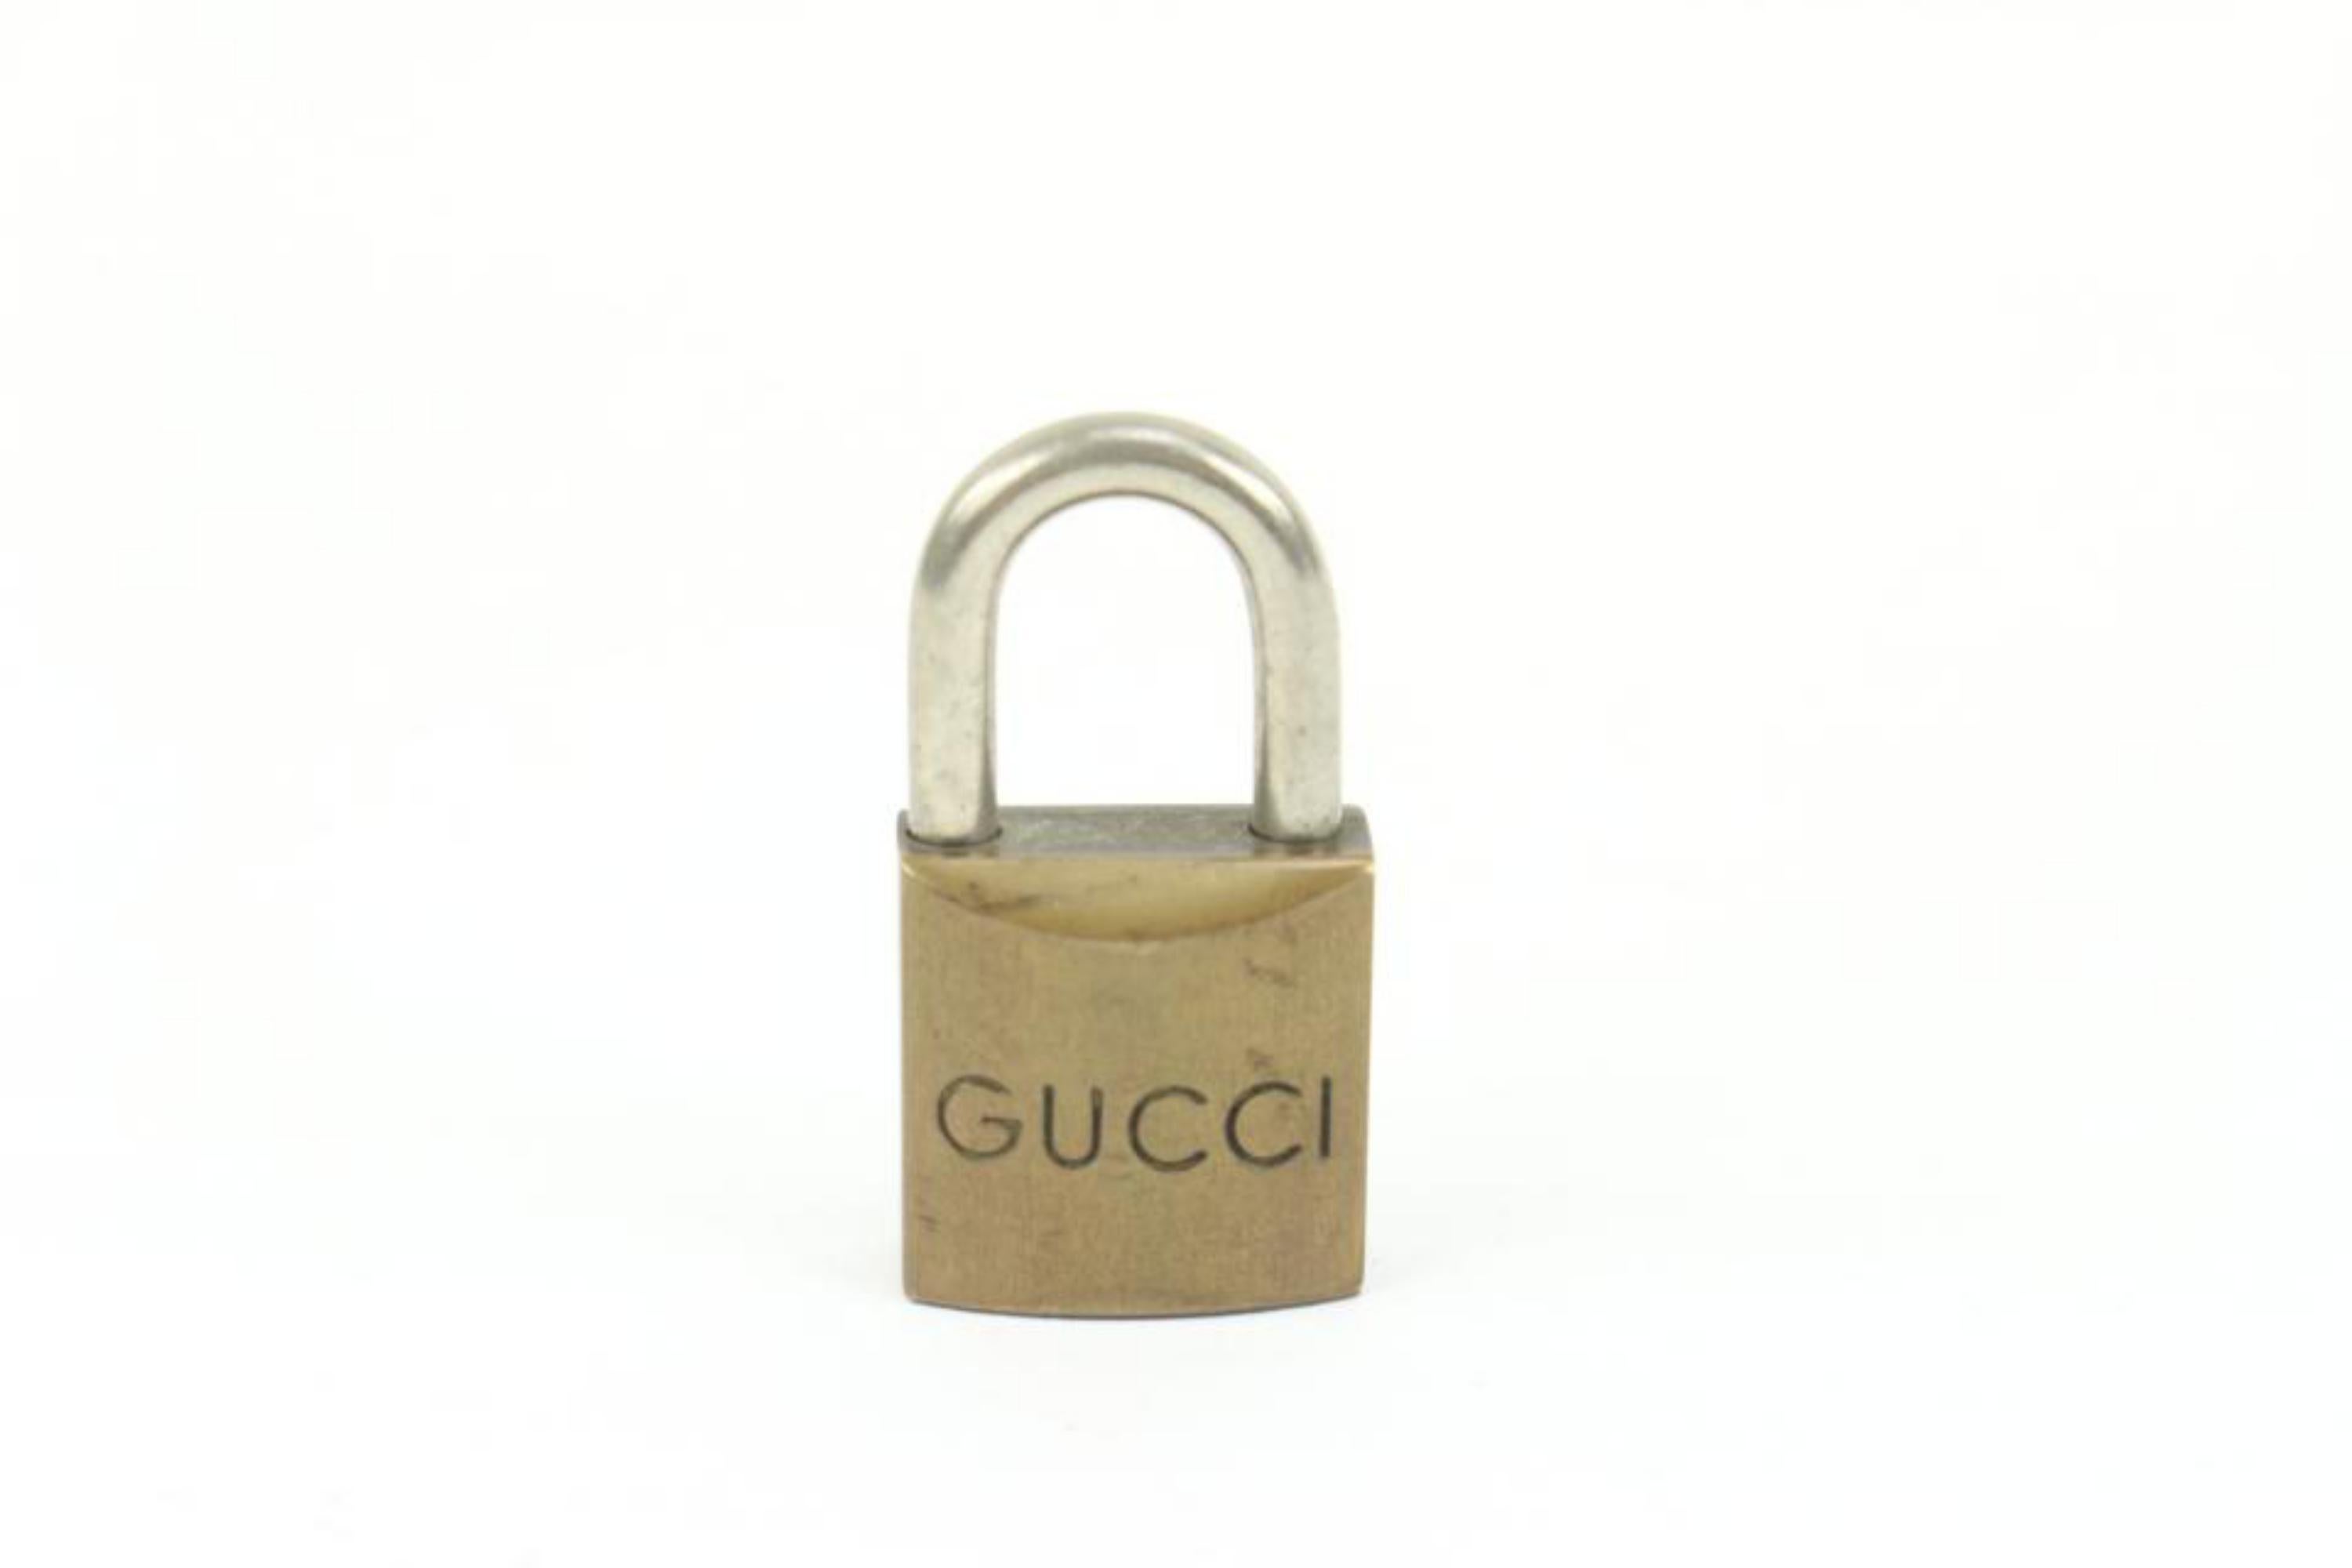 Gucci Vintage Brass Lock and Key Set Cadena Padlock Bag Charm 17g34s 2